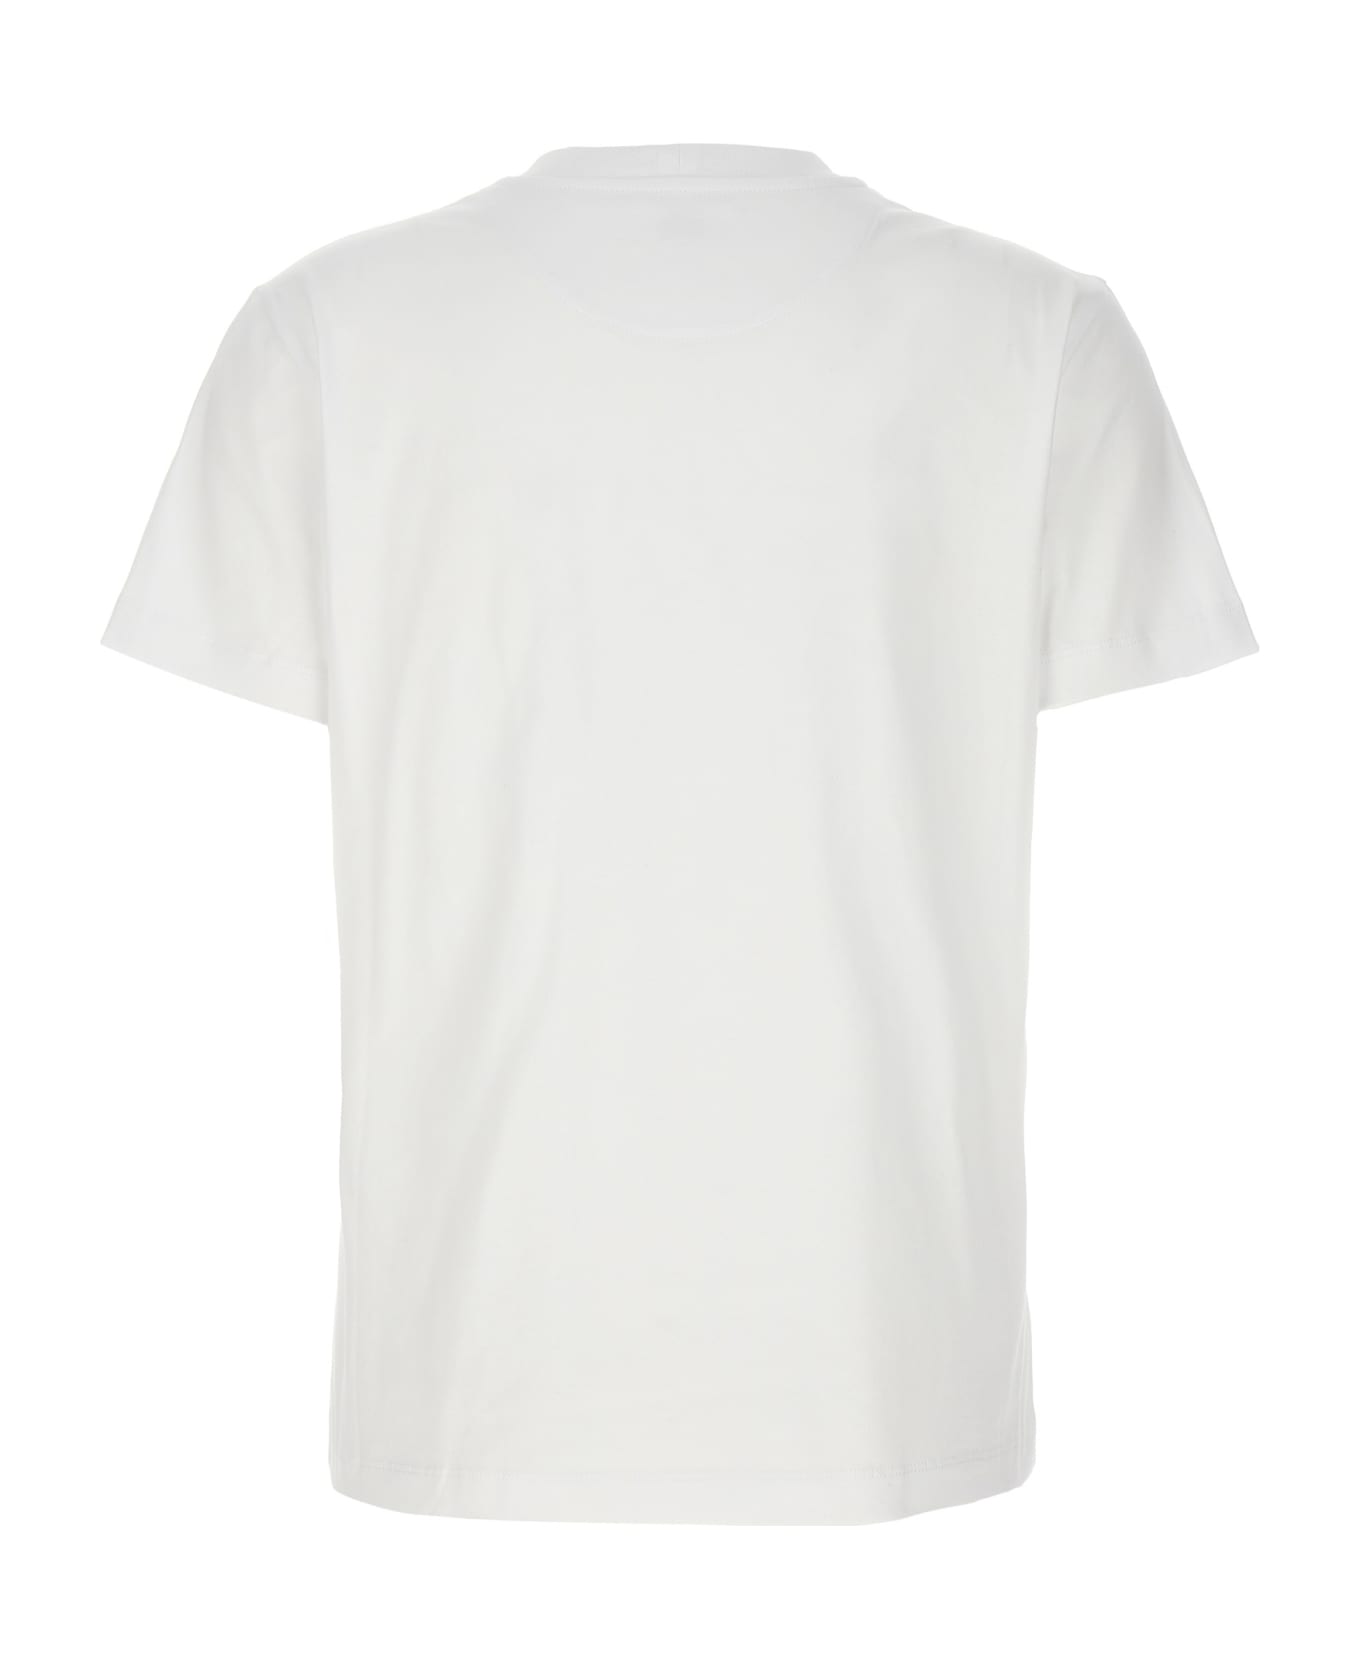 Bally Logo T-shirt - White